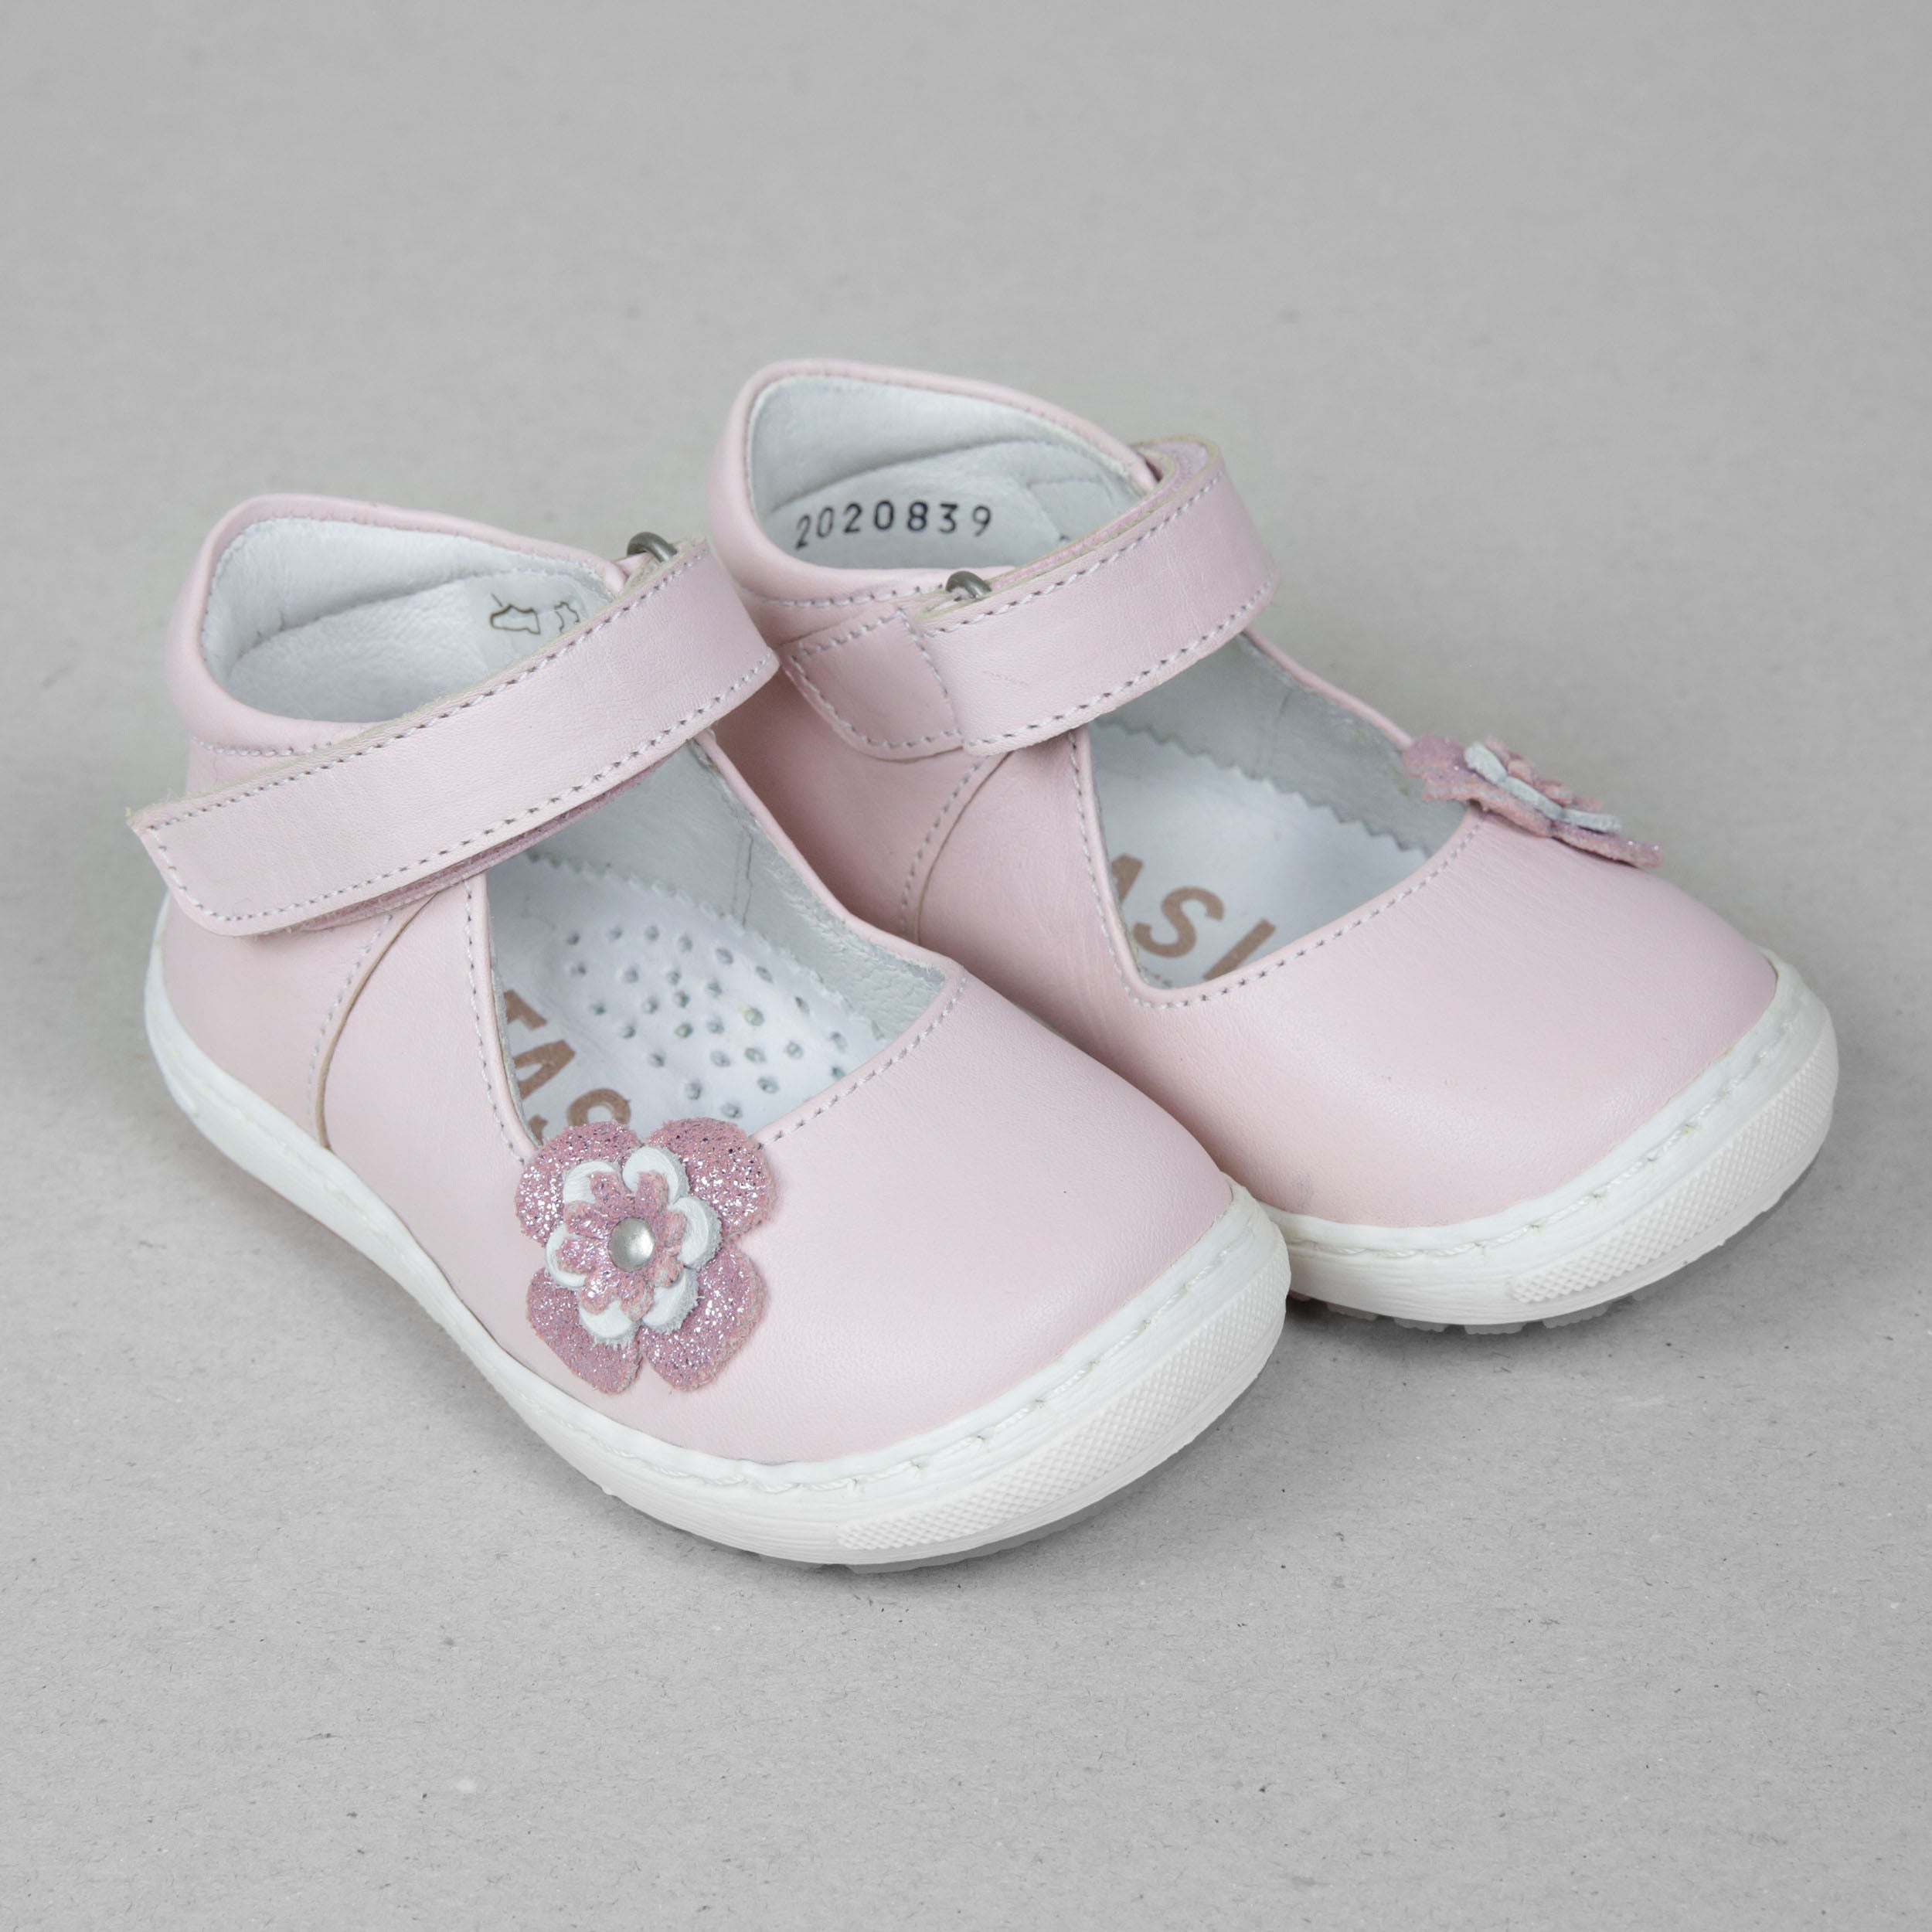 Petasil Justine Kids Girls Pale Pink Leather Boots UK 4.5 / EUR 21